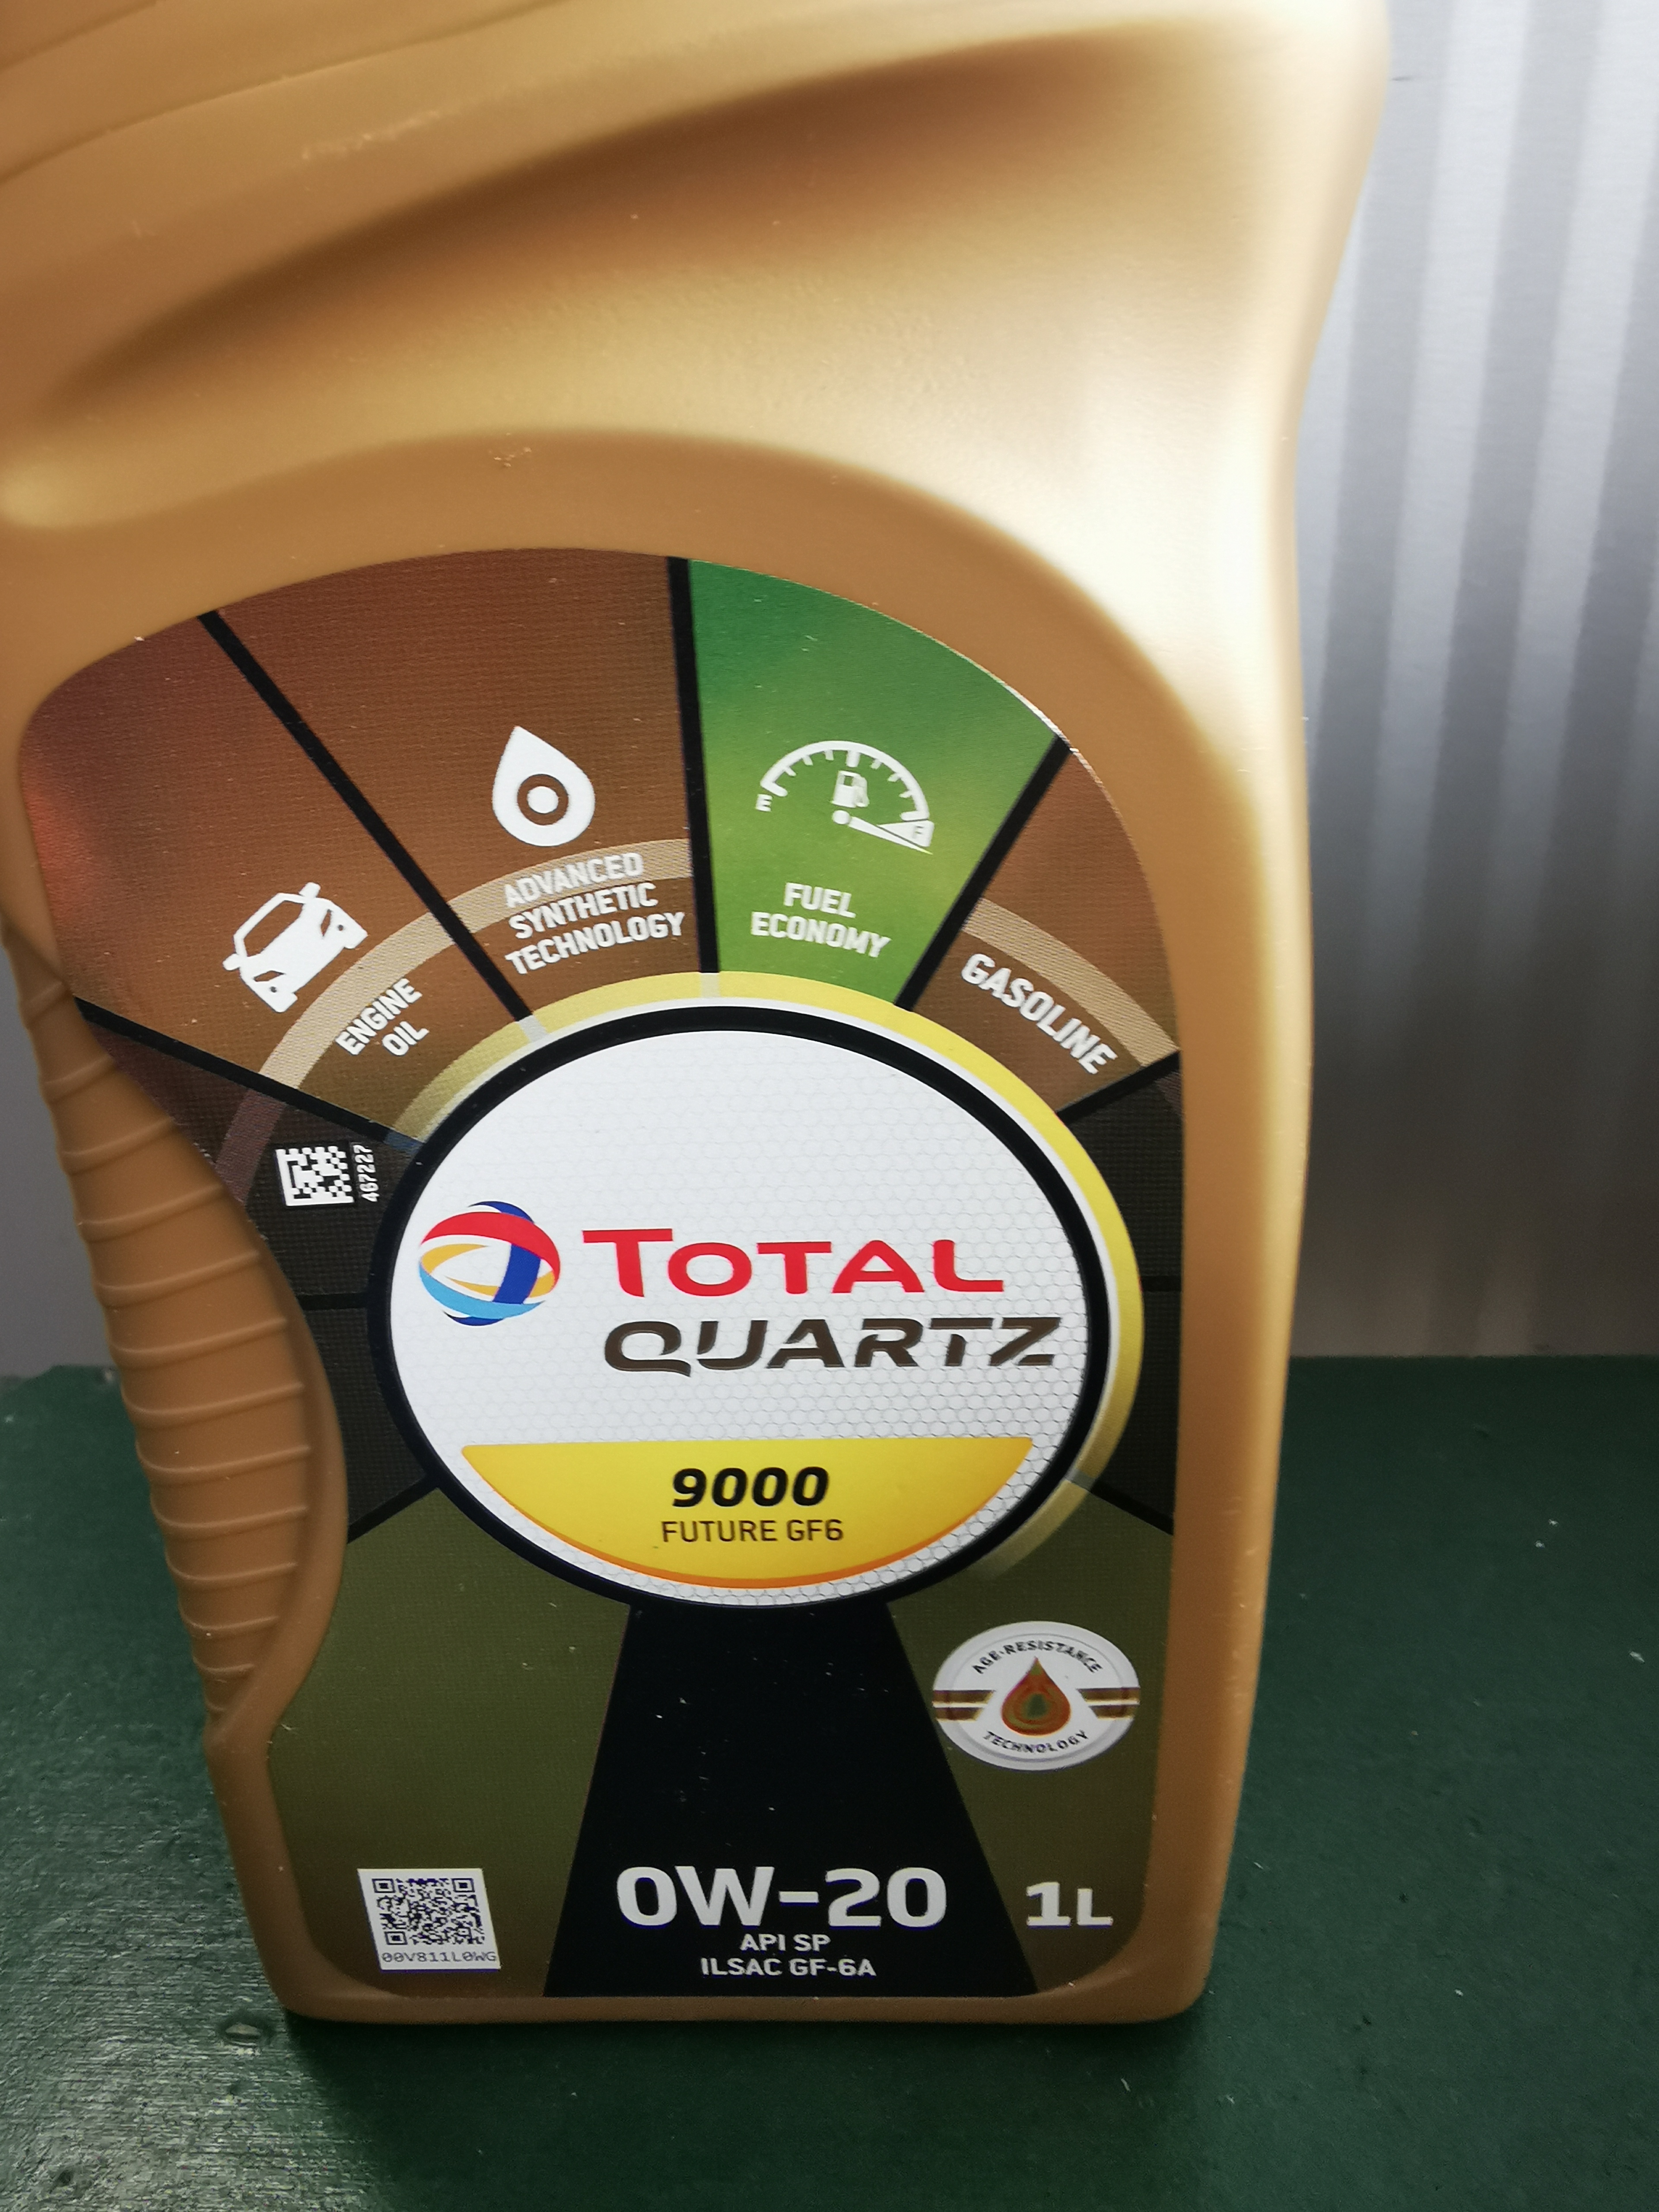 Total Quartz 9000 FUTURE GF6 0W-20 1L